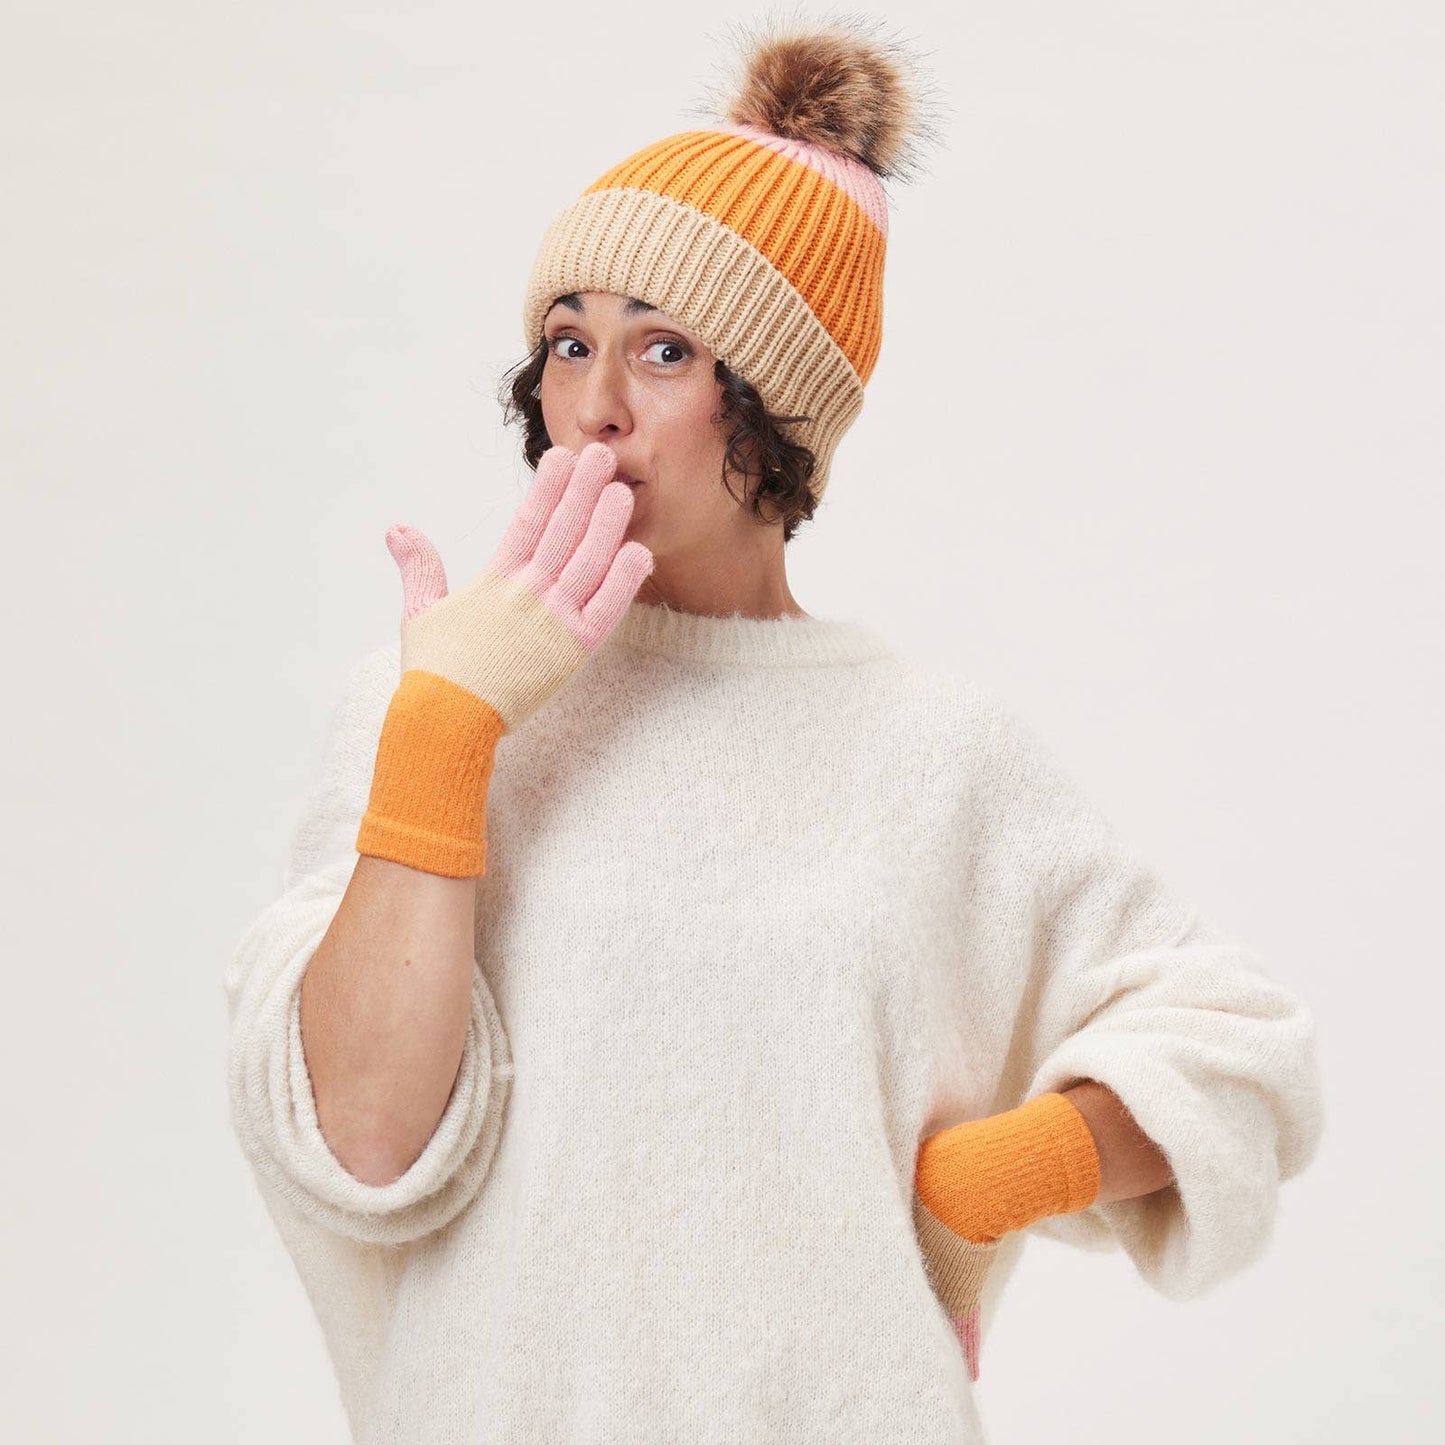 Paddington Orange Knit Gloves